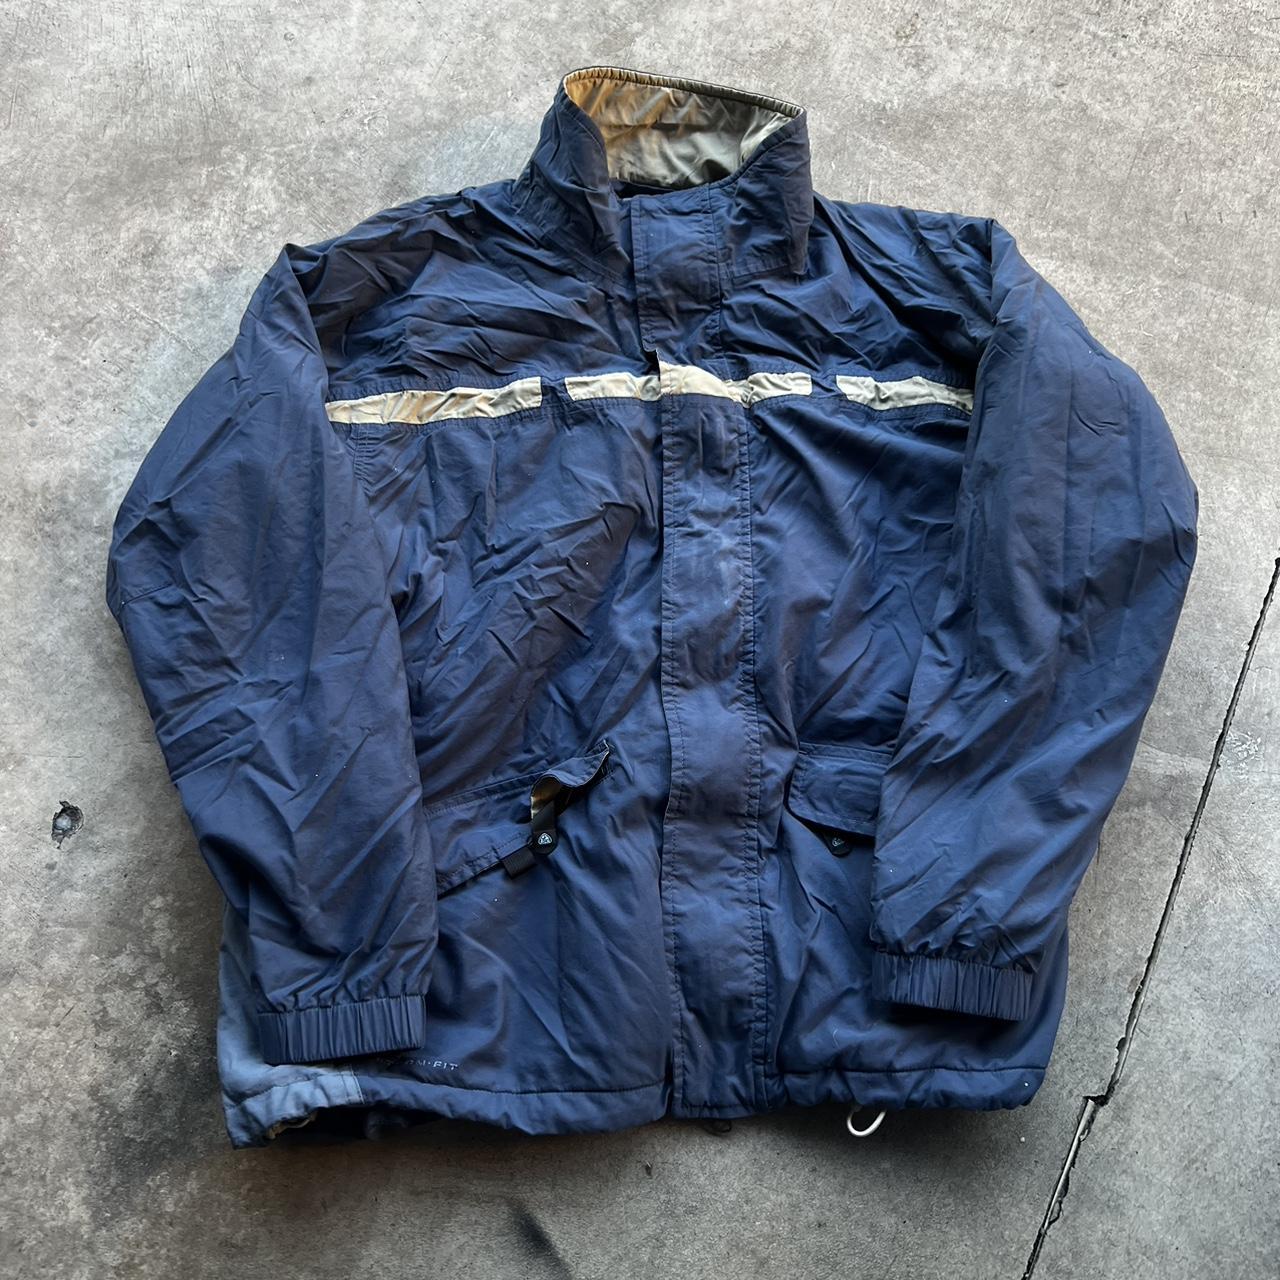 Vintage 90s ACG Jacket Size Xl, condition shown... - Depop